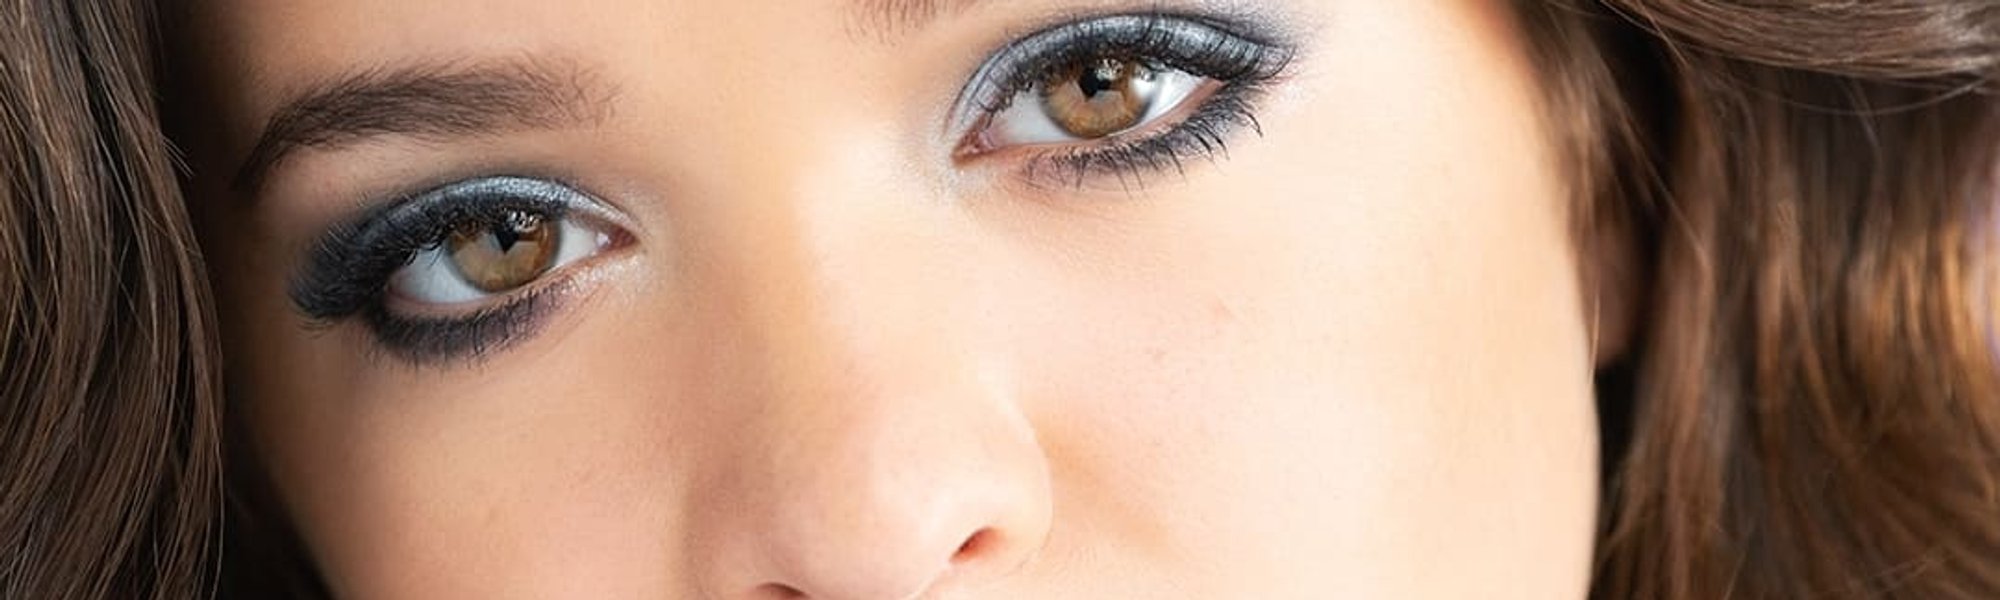 How To Do Mod Smokey Eyeshadow That S Diy Beauty Goals 1080x476